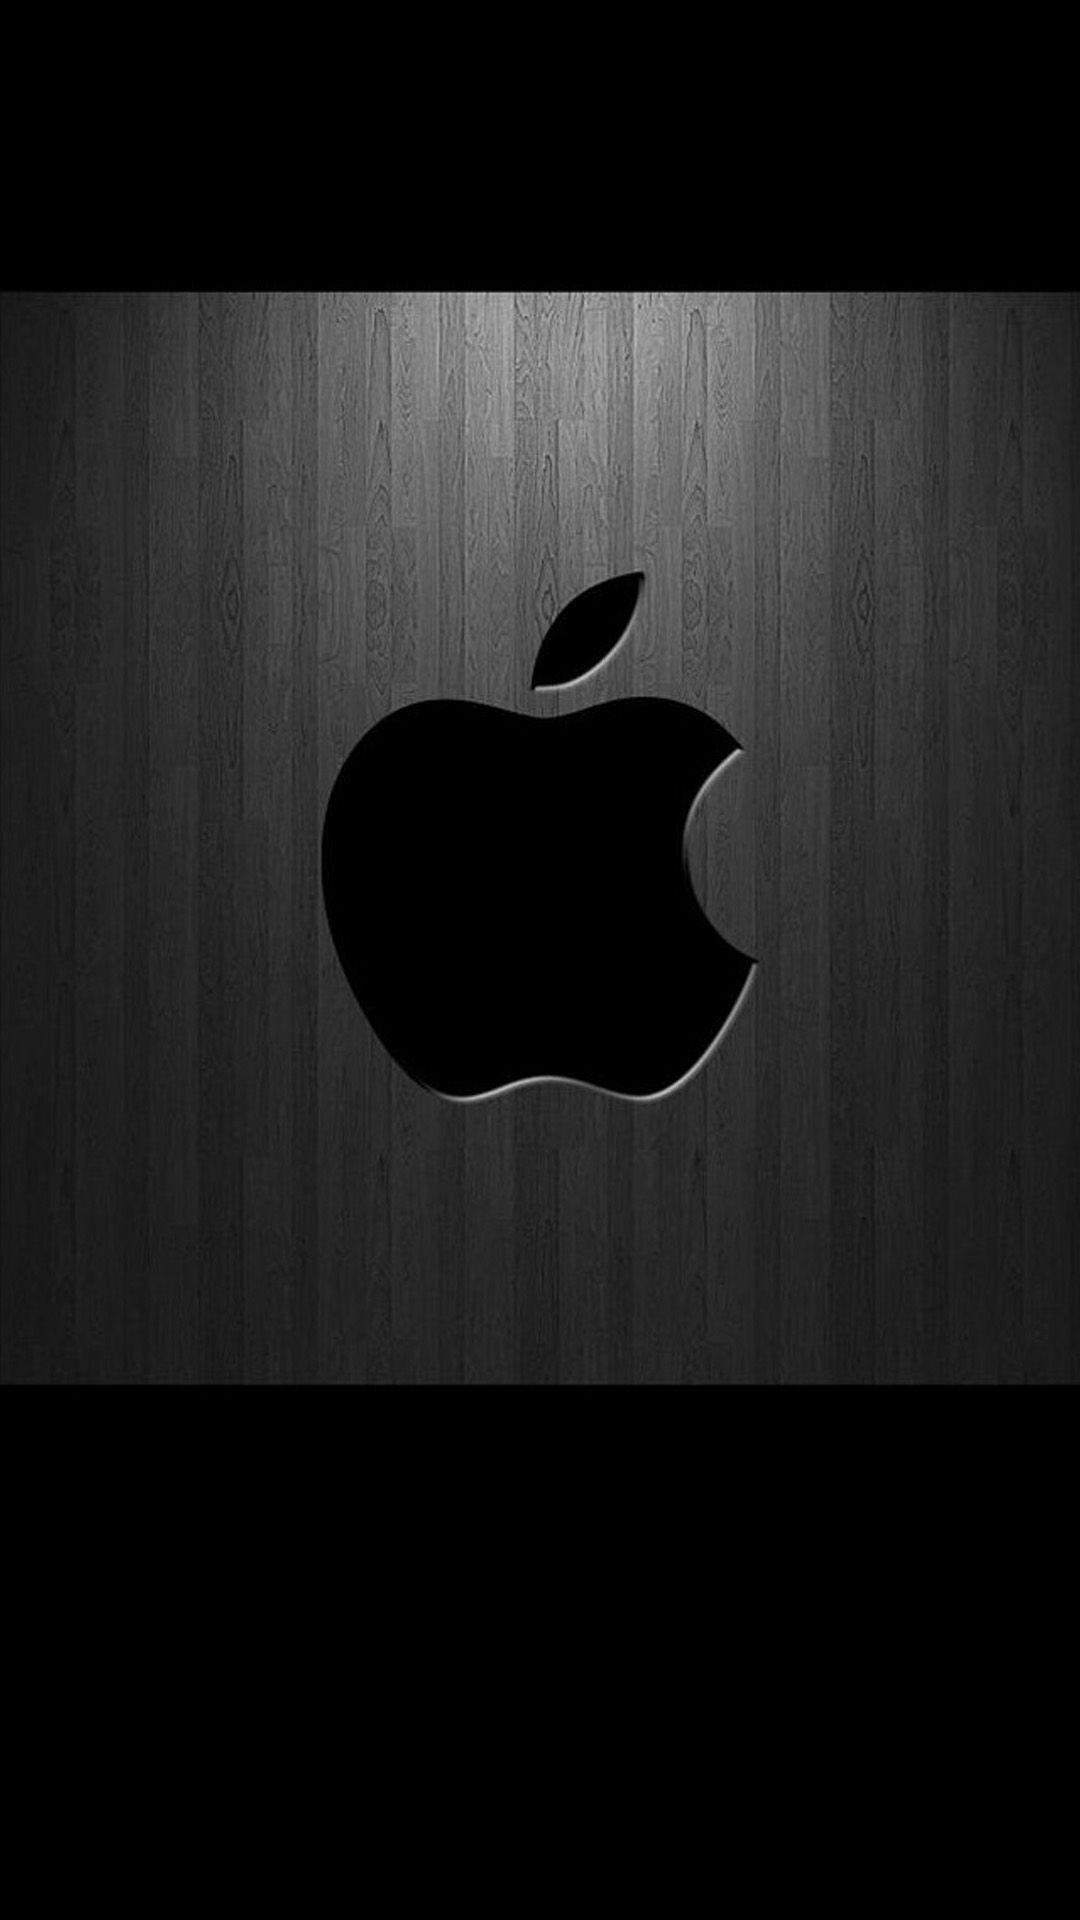 Wallpaper.wiki Black Apple Logo IPhone Background PIC WPC004856